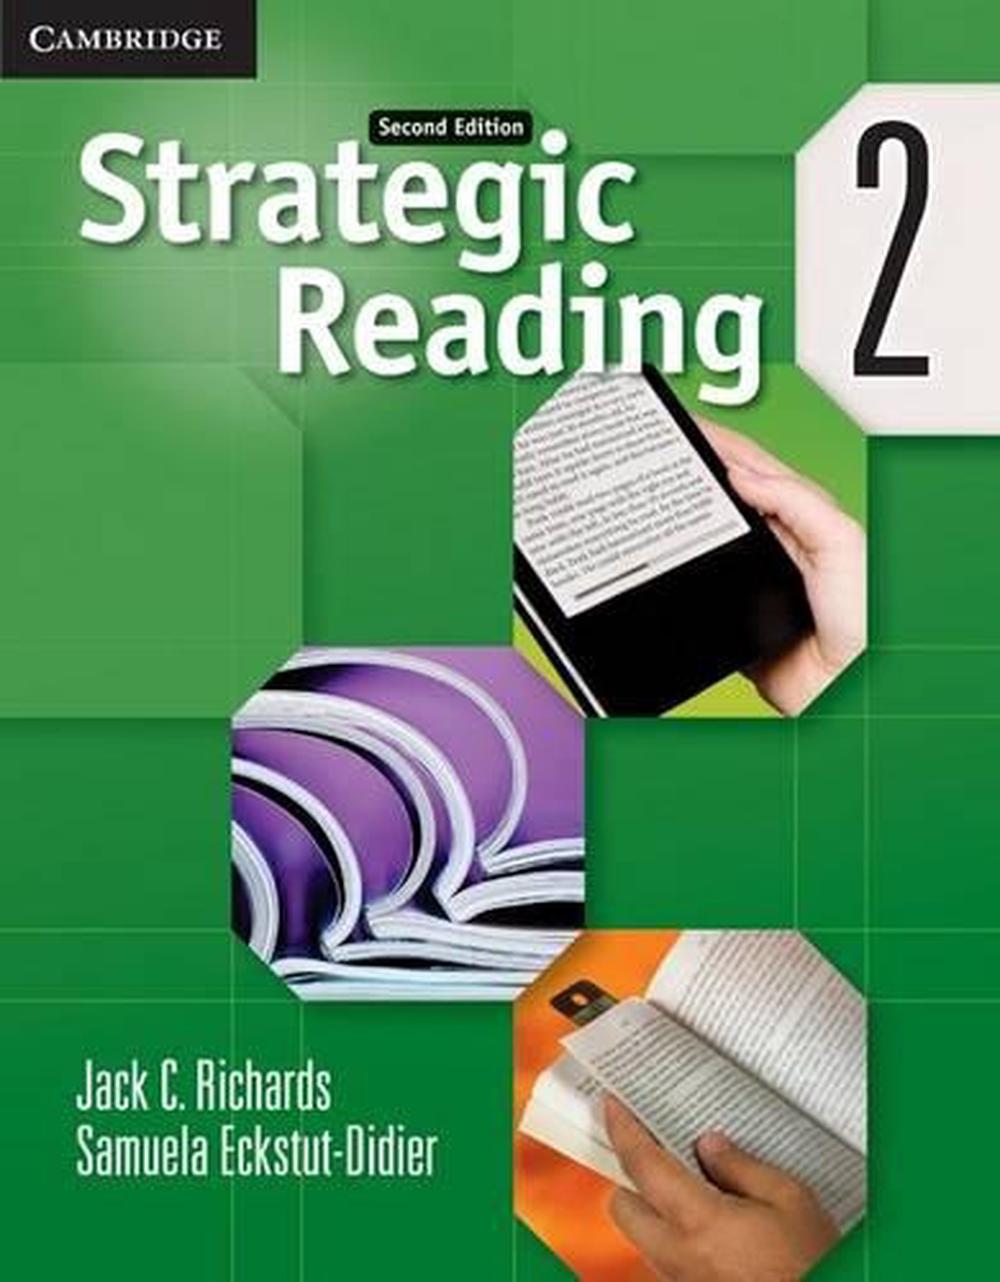 Strategic Reading Level 2 Student's Book by Jack C. Richards (English